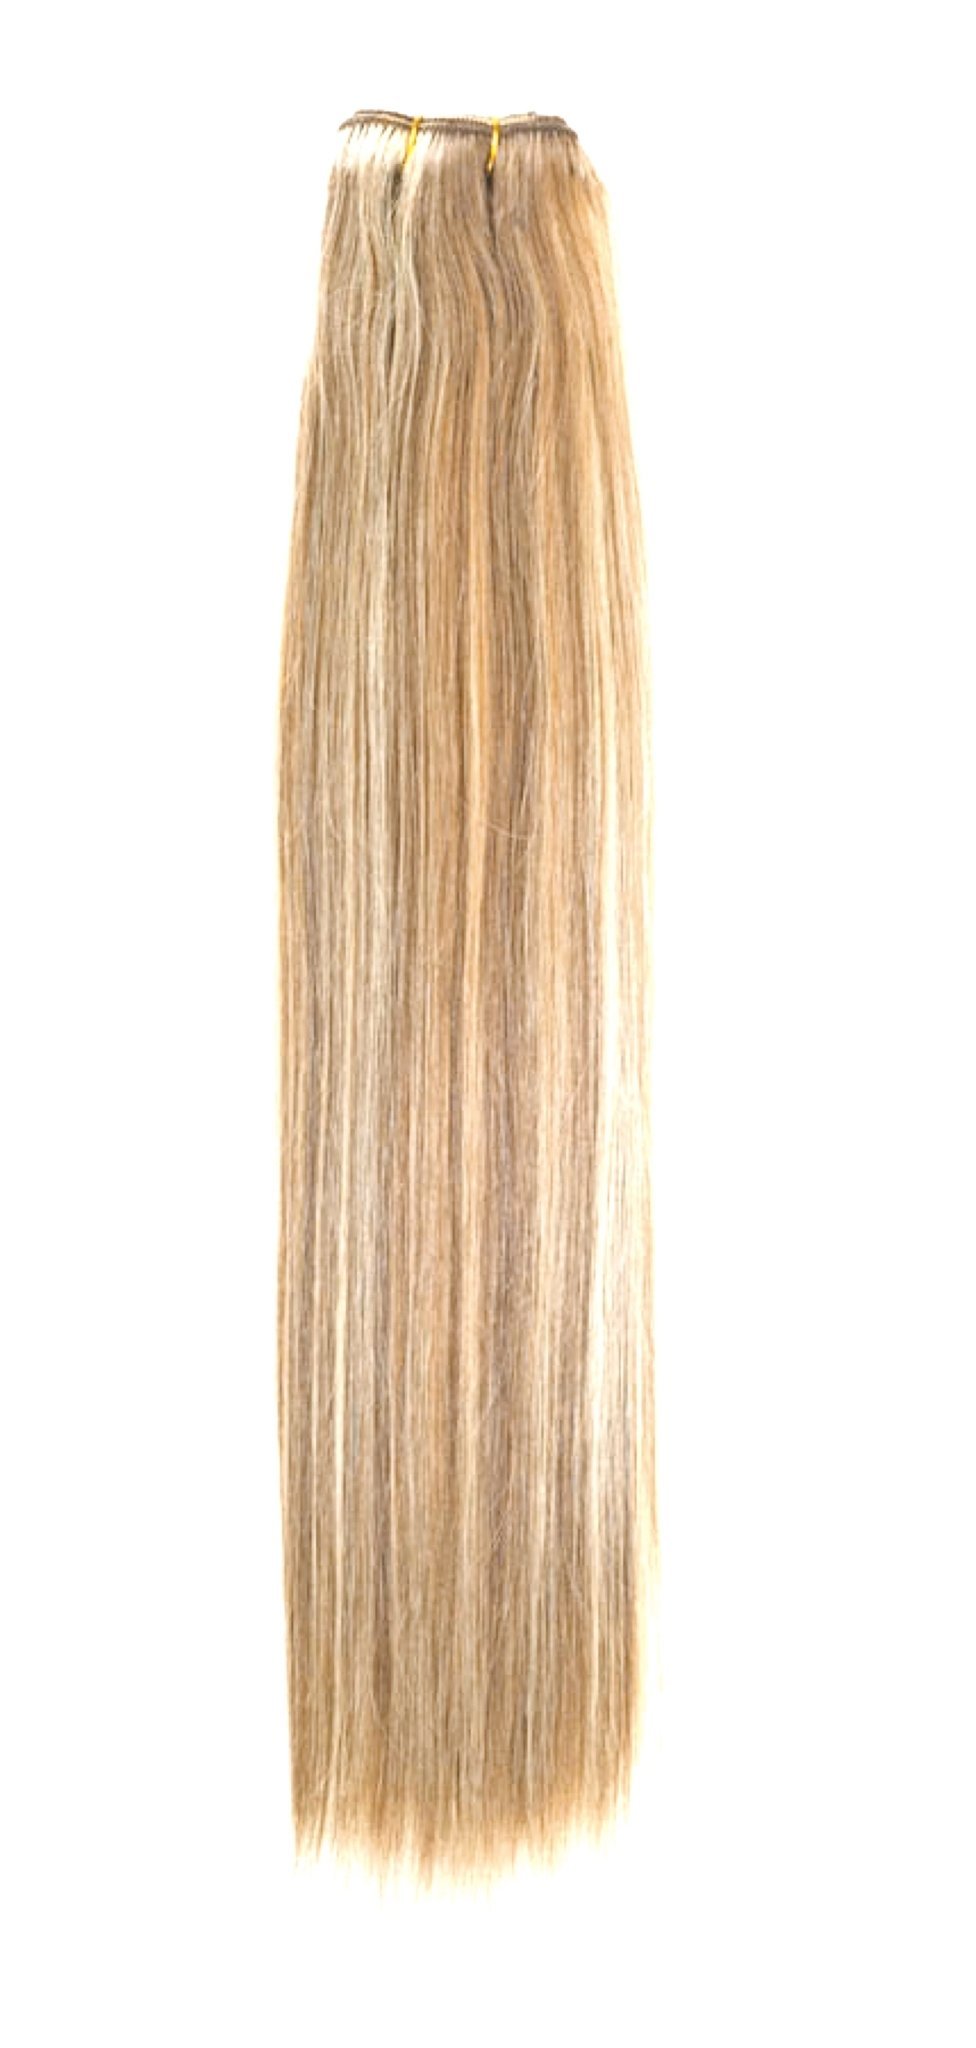 Euro Weave Hair Extensions 22" Brown Blonde Blend (8/613) - beautyhair.co.ukHair Extensions